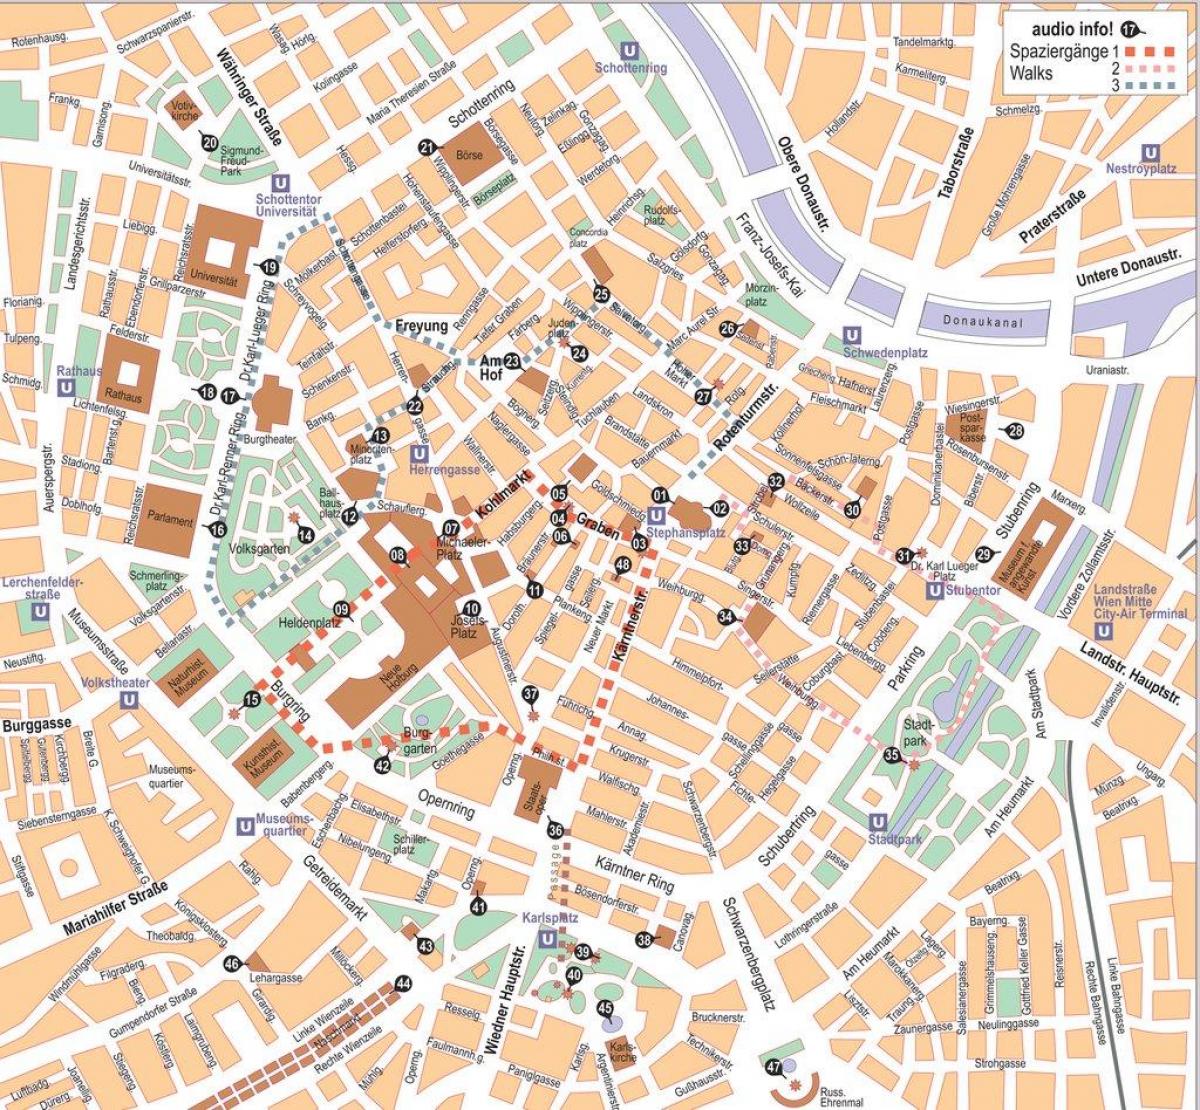 offline mappa di Vienna